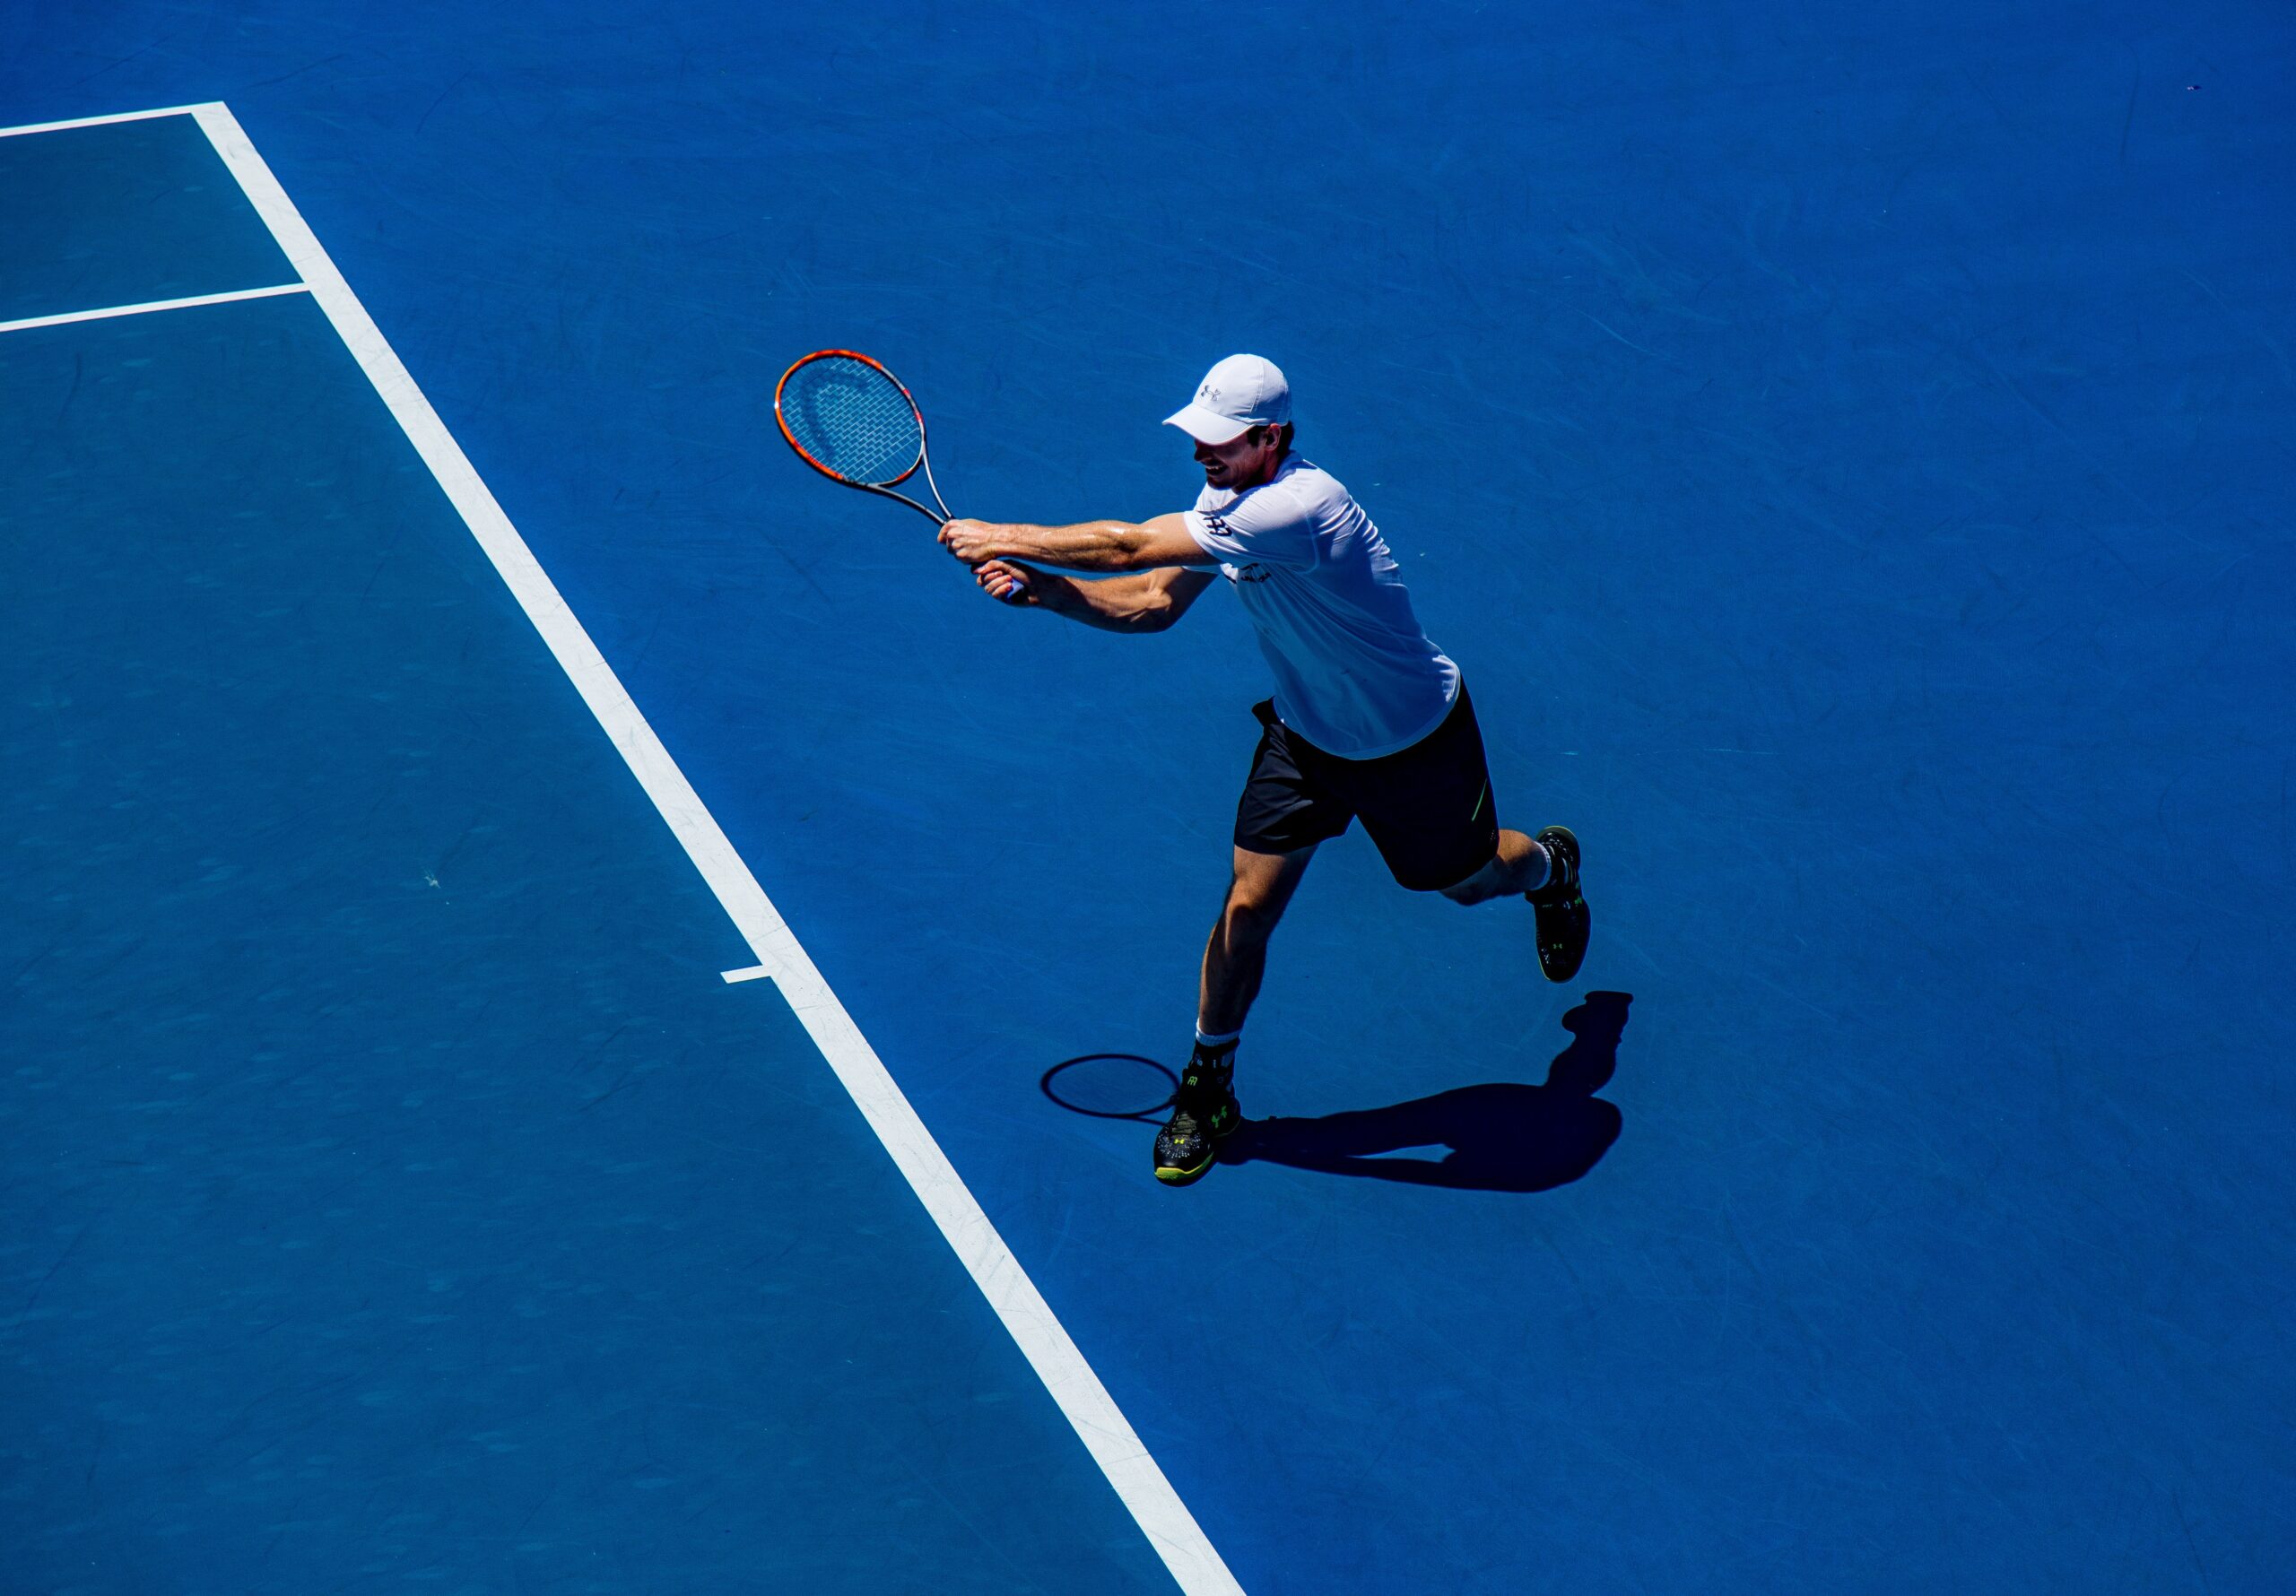 Photo Of Tennis Player By Christopher Burns Via Unsplash.com